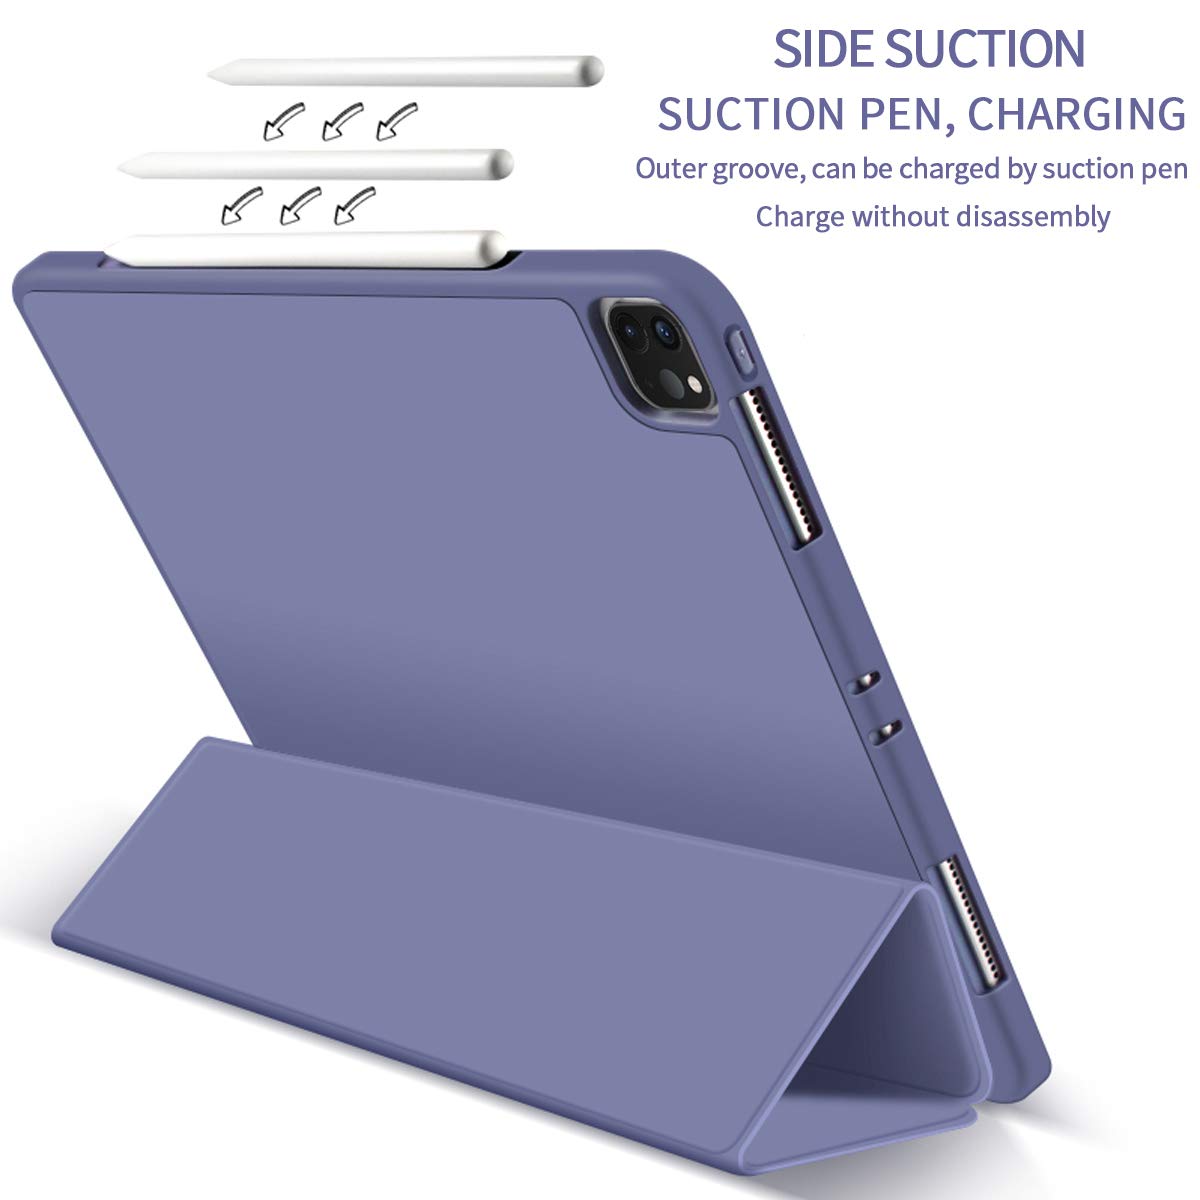 2020 New Smart Tri-Fold Soft TPU Case Shell For iPad 2020 Pro 12.9